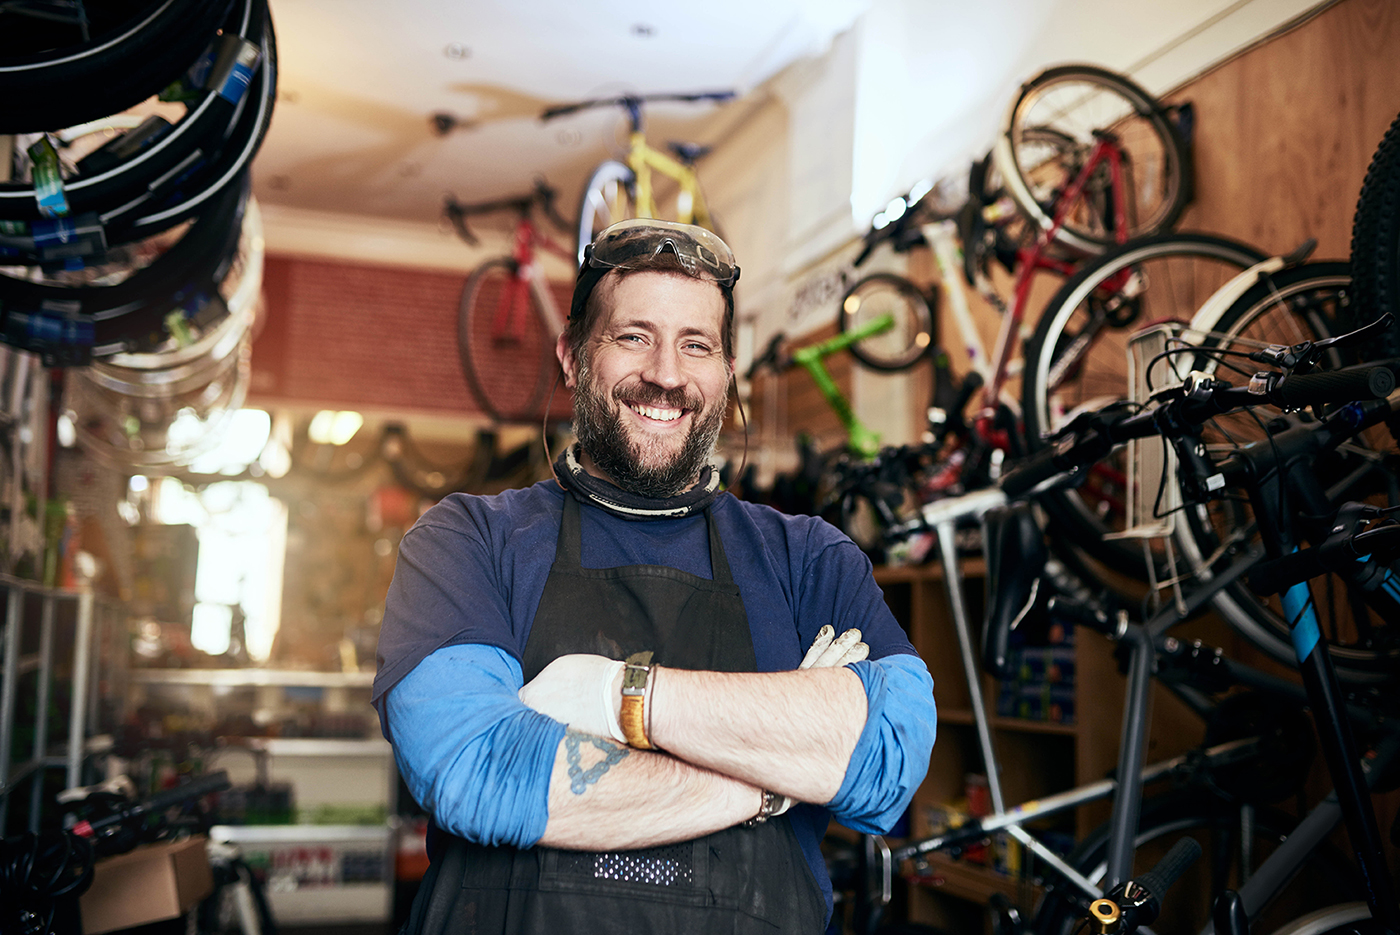 A bearded man smiles in a bike shop.